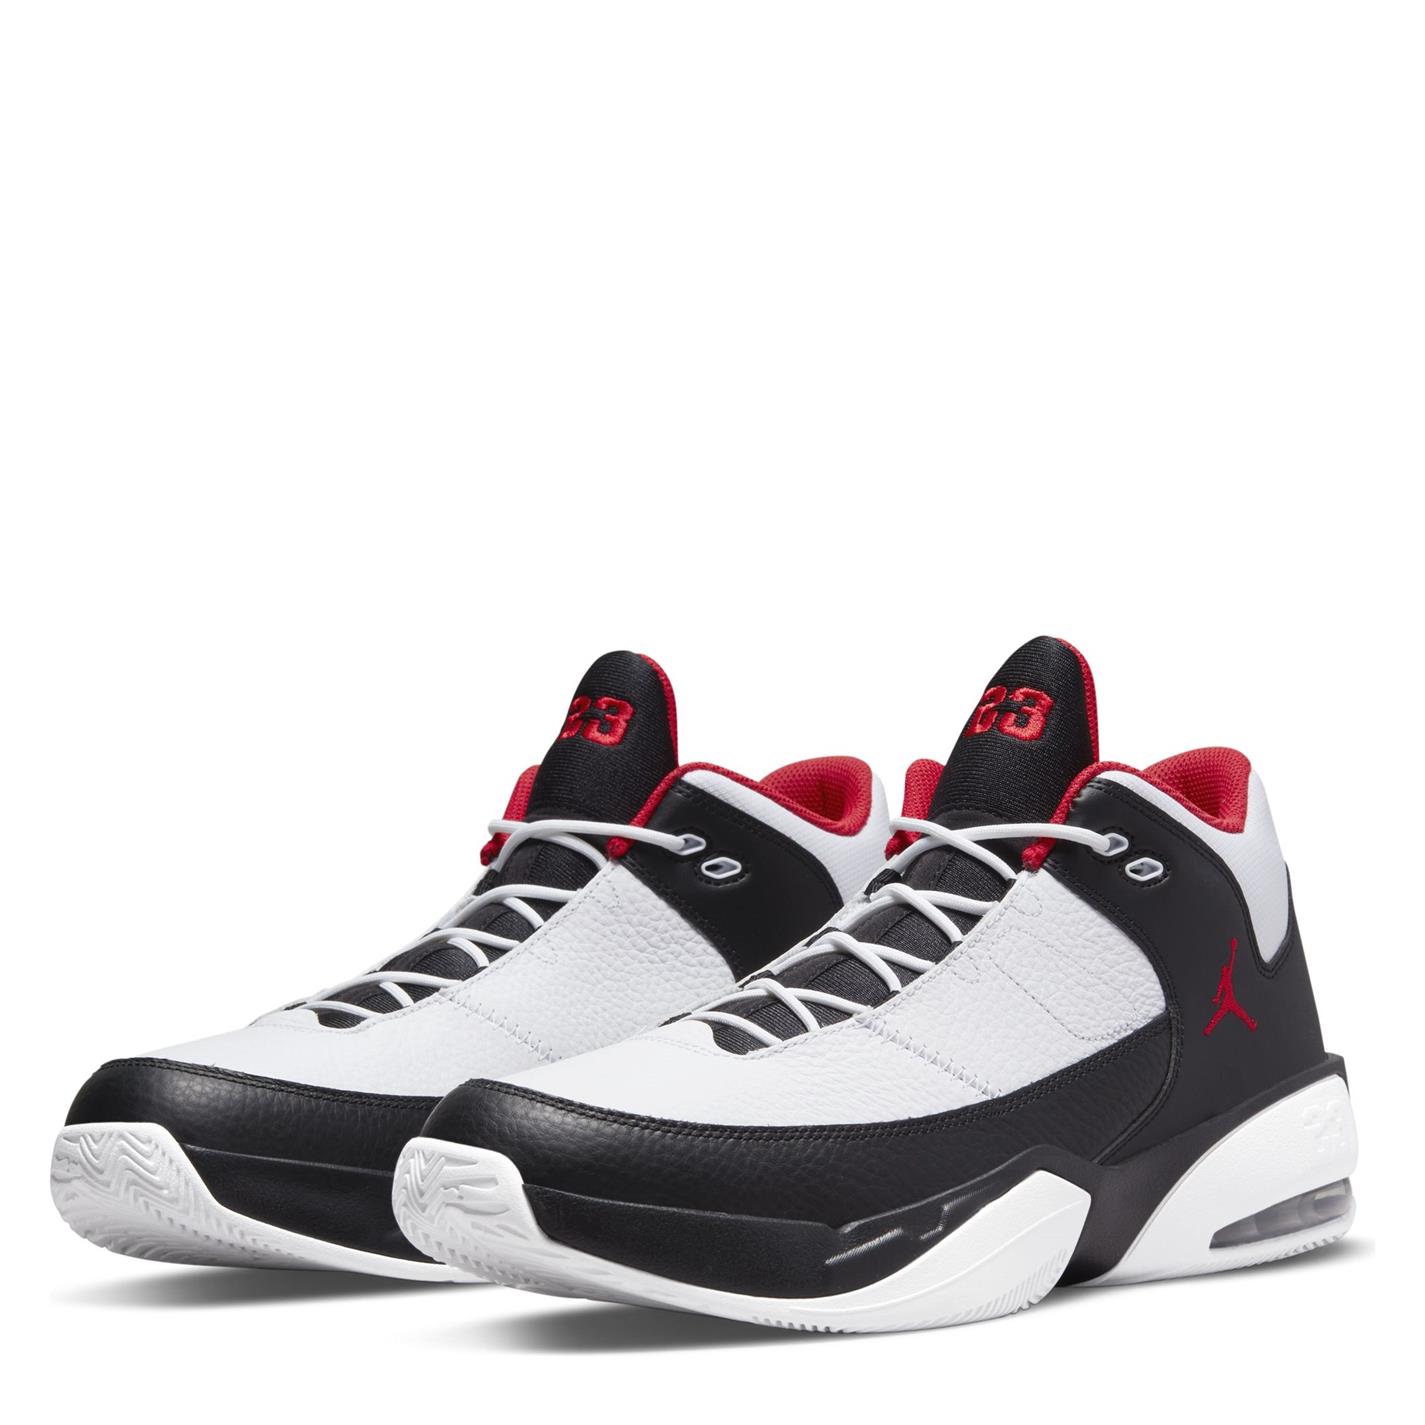 Air Jordan Max Aura 3 Shoe pentru Barbati alb negru rosu